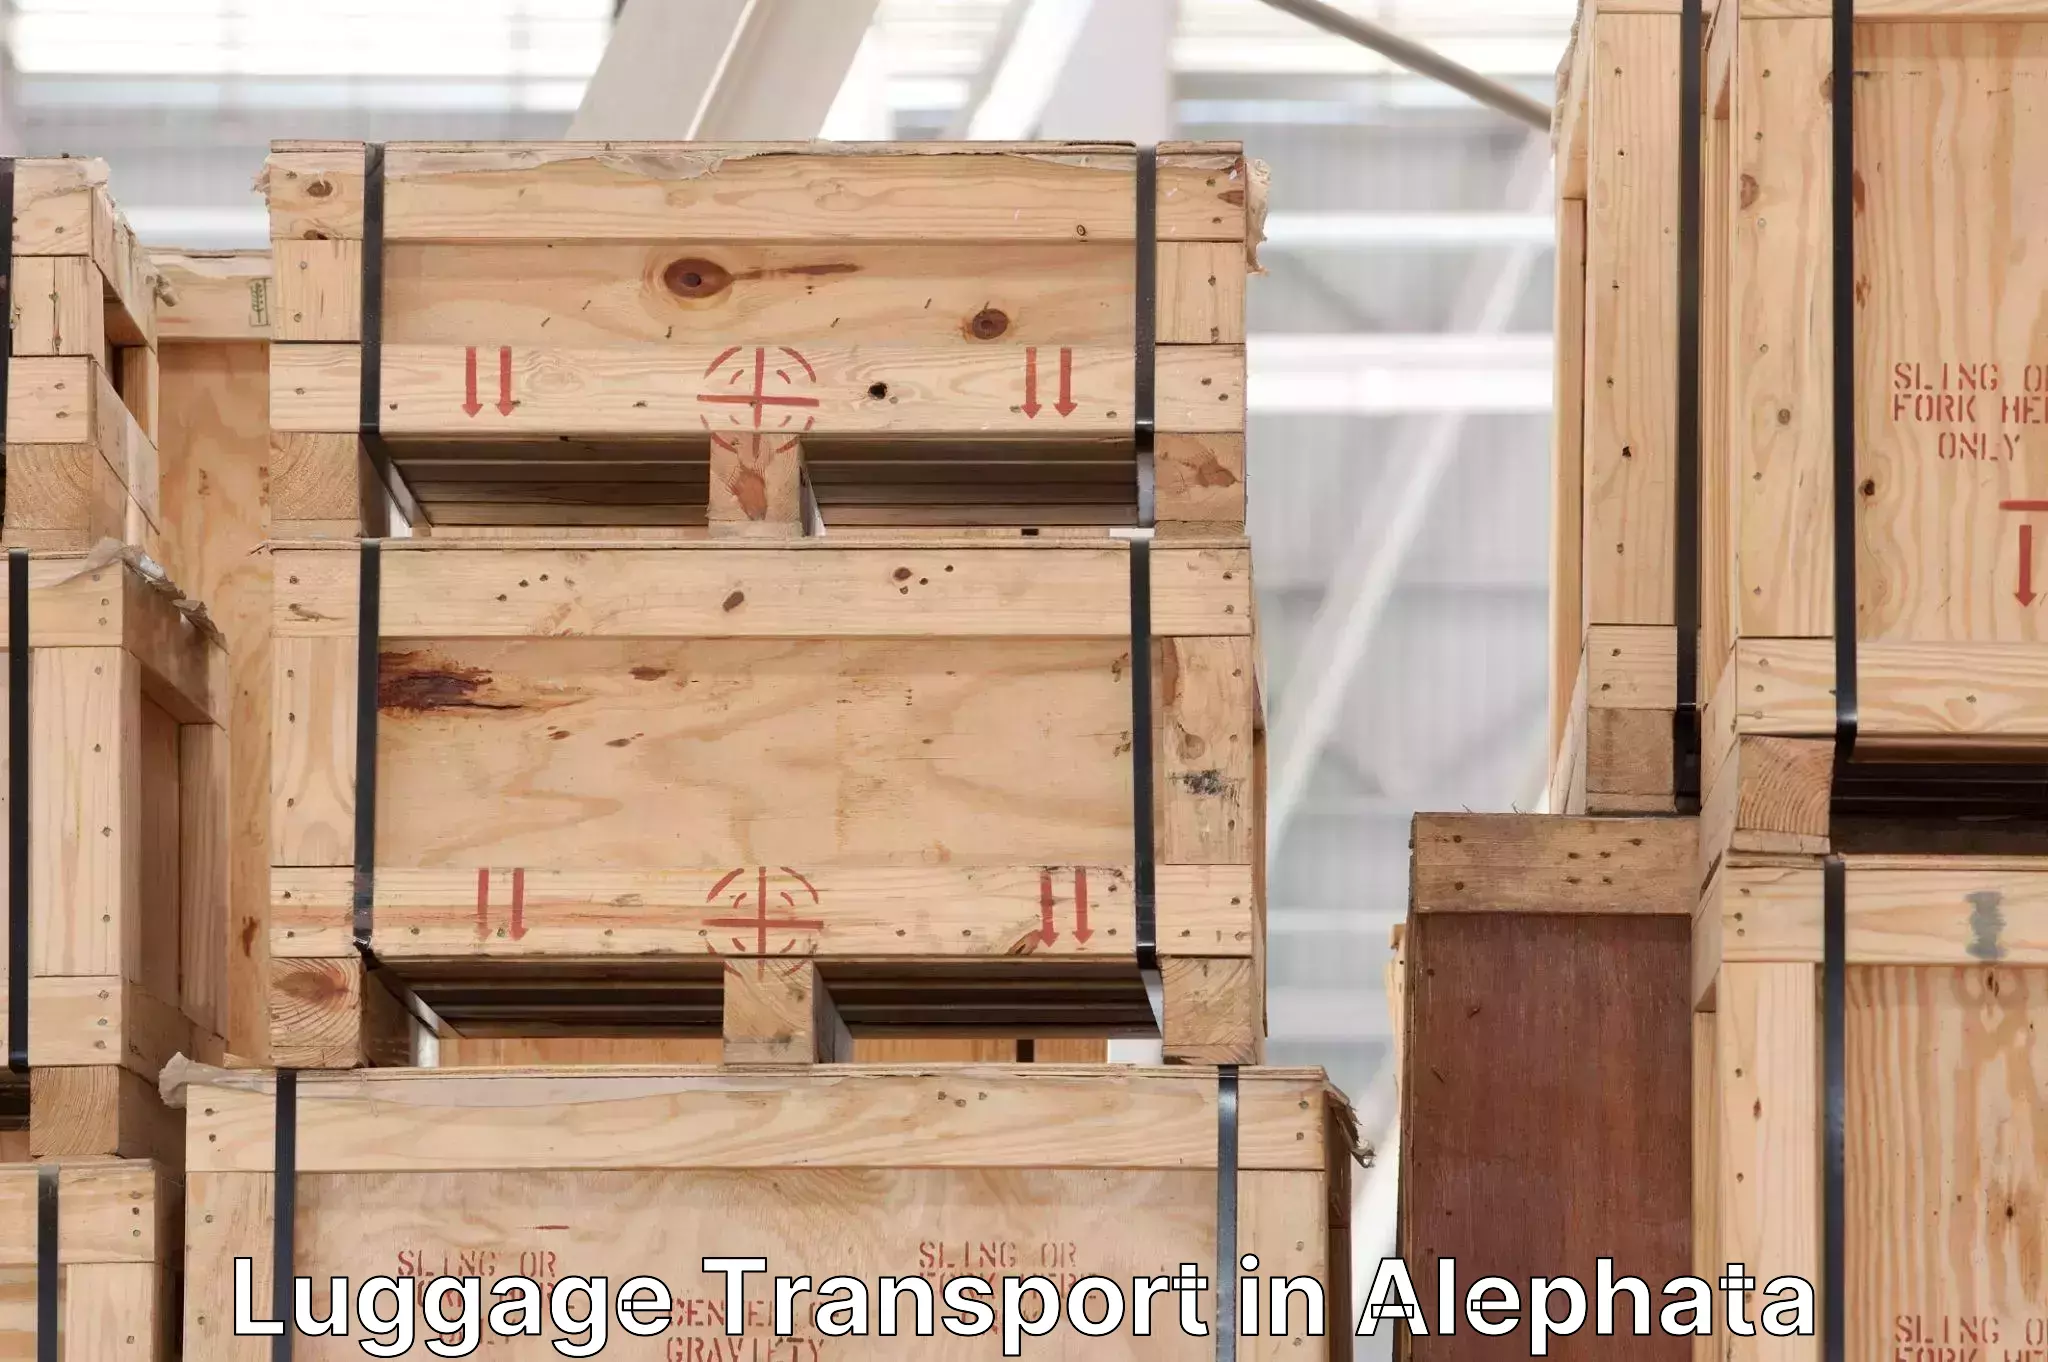 Luggage transfer service in Alephata